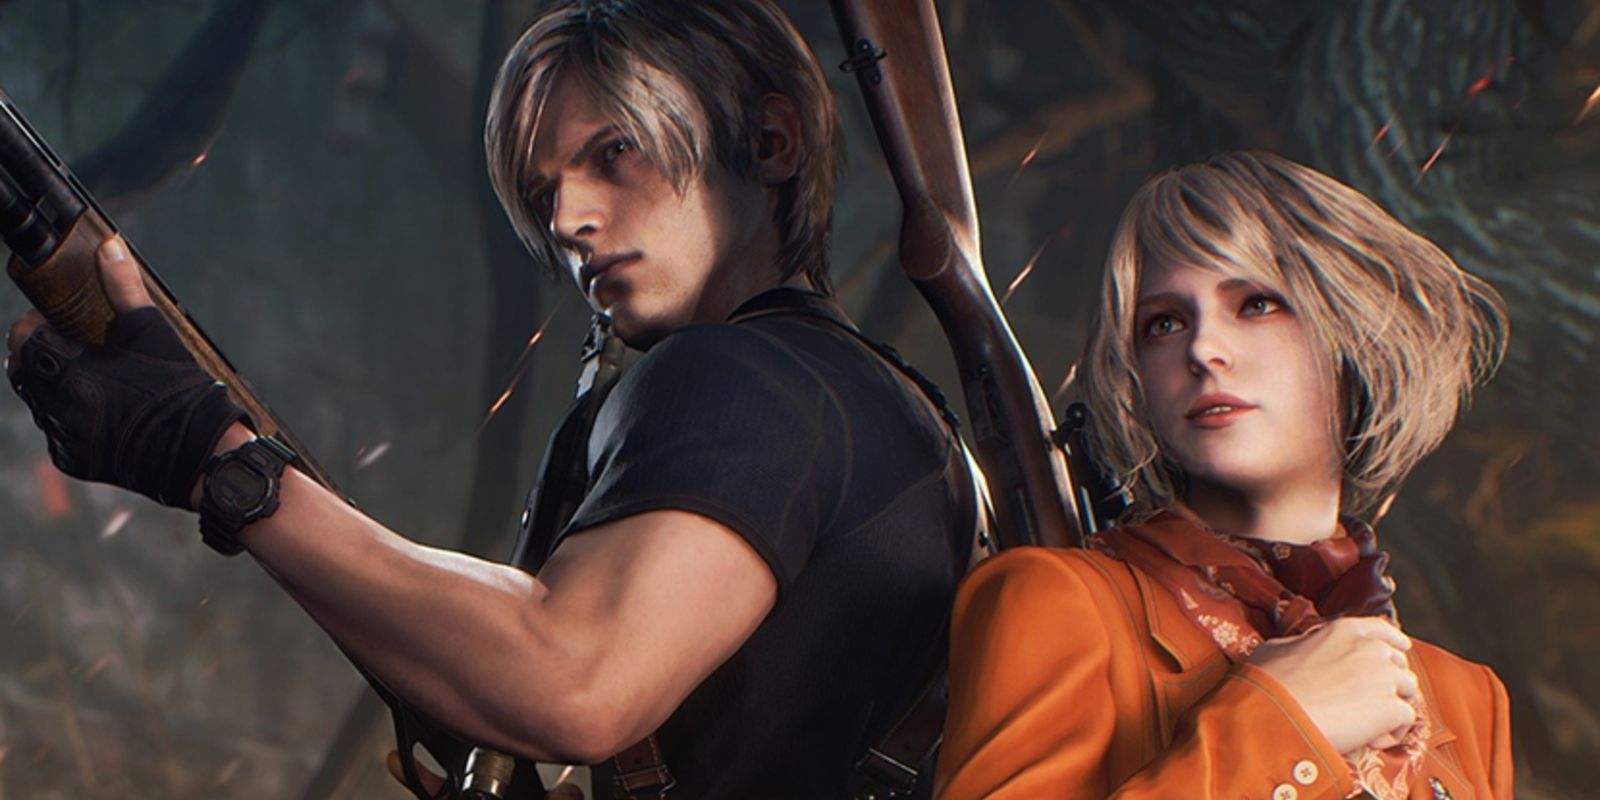 Leon dari Resident Evil 4 Remake memegang senapan sambil melindungi Ashley, yang saling membelakangi dengannya.